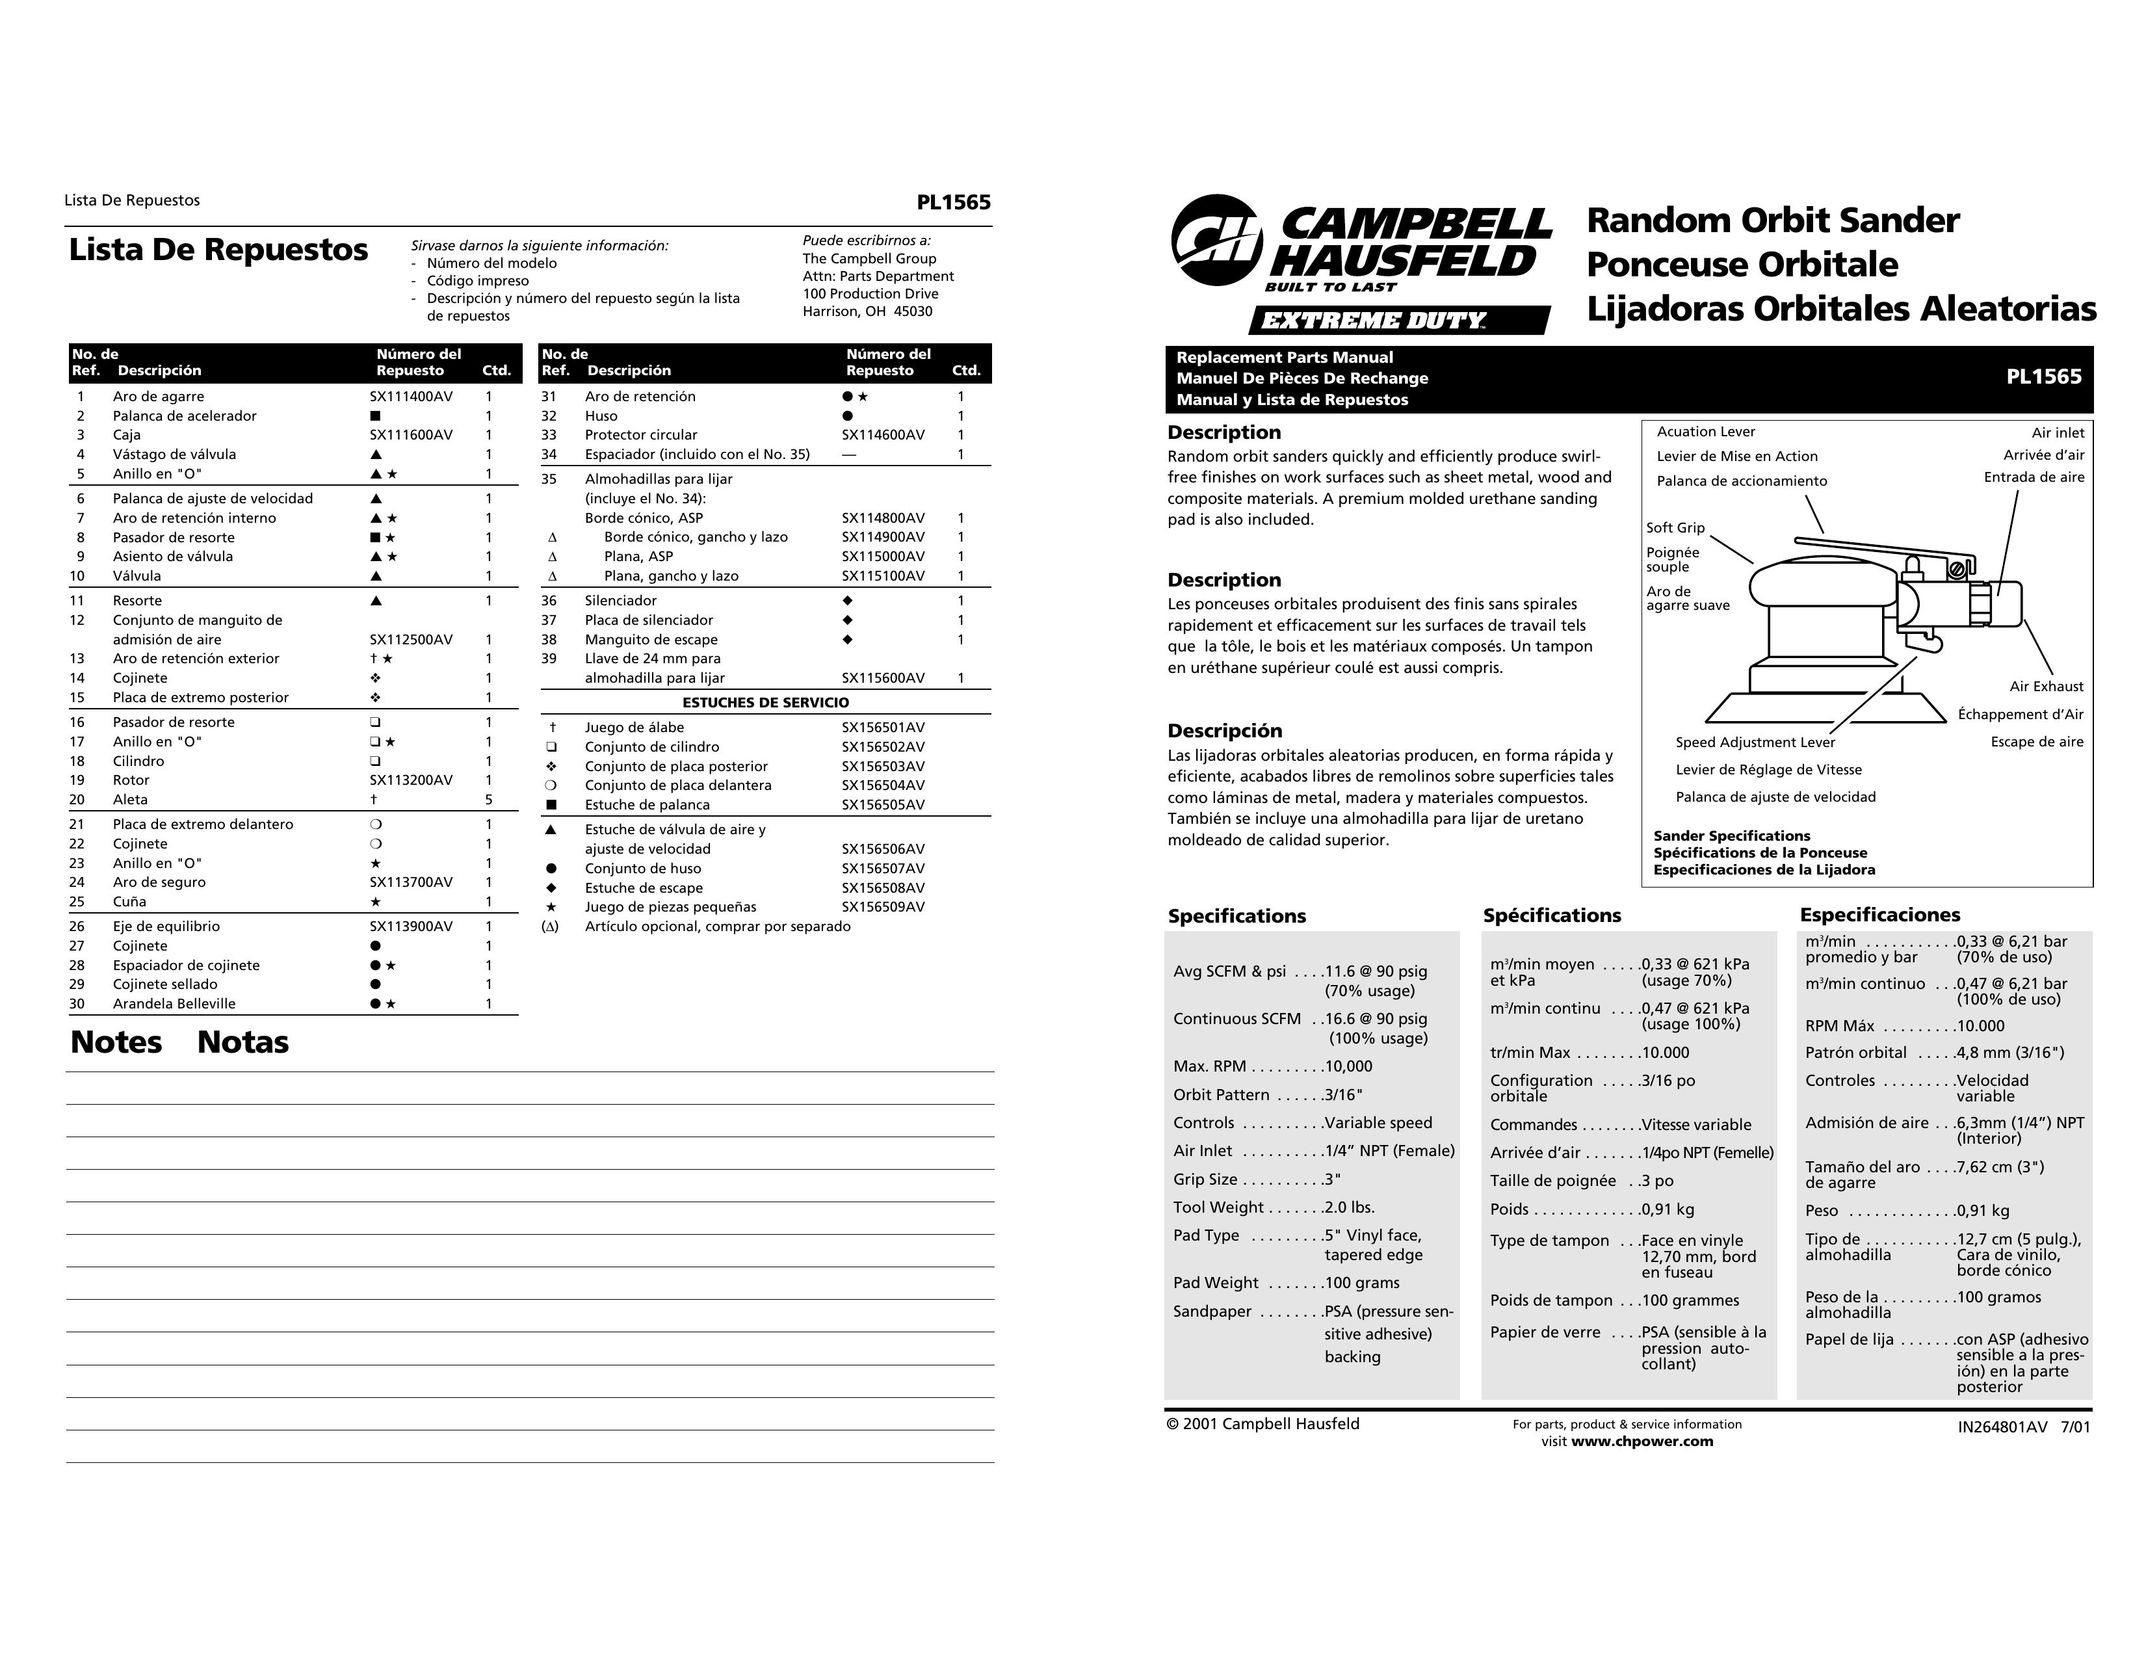 Campbell Hausfeld PL1565 Cordless Sander User Manual